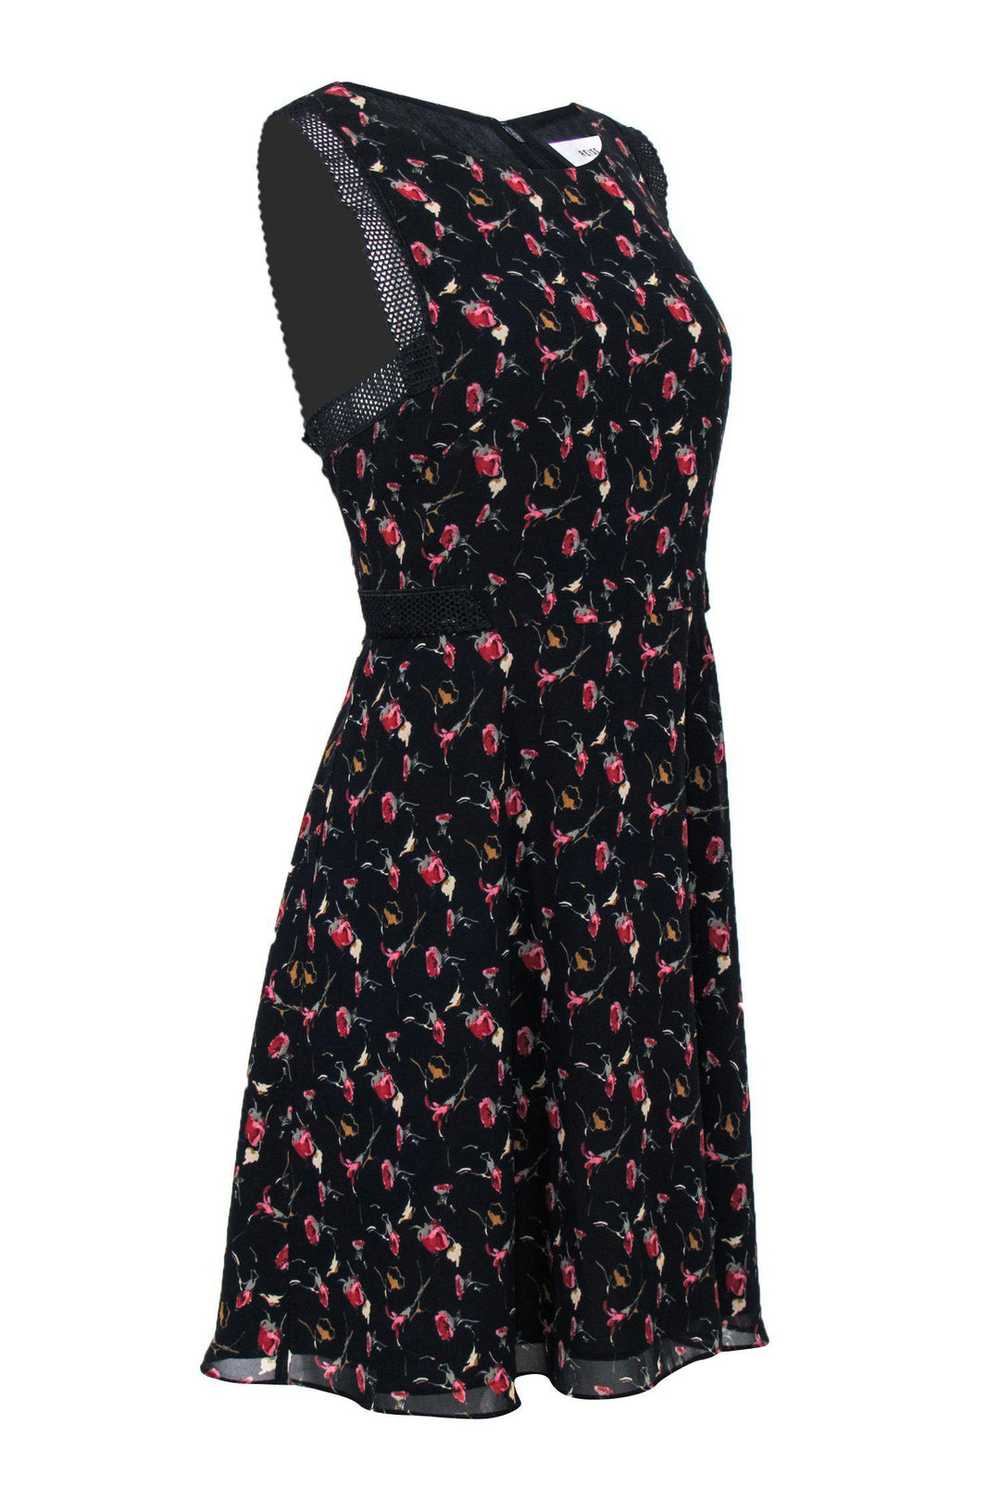 Reiss - Black Floral "Louise" Dress w/ Eyelet Lac… - image 2